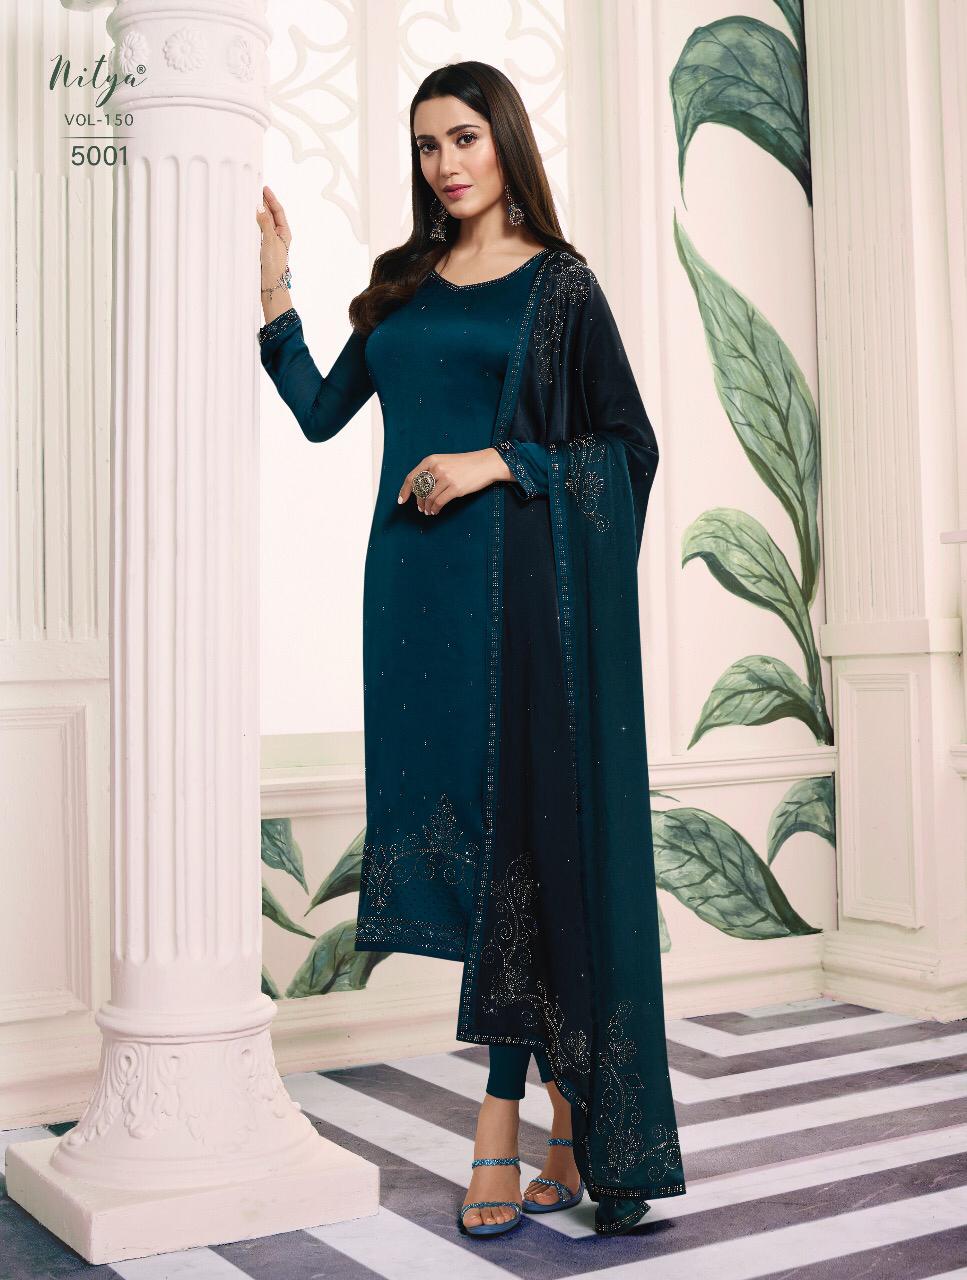 LT Nitya vol 150 innovative style elagant look Stylish Designed Salwar suits